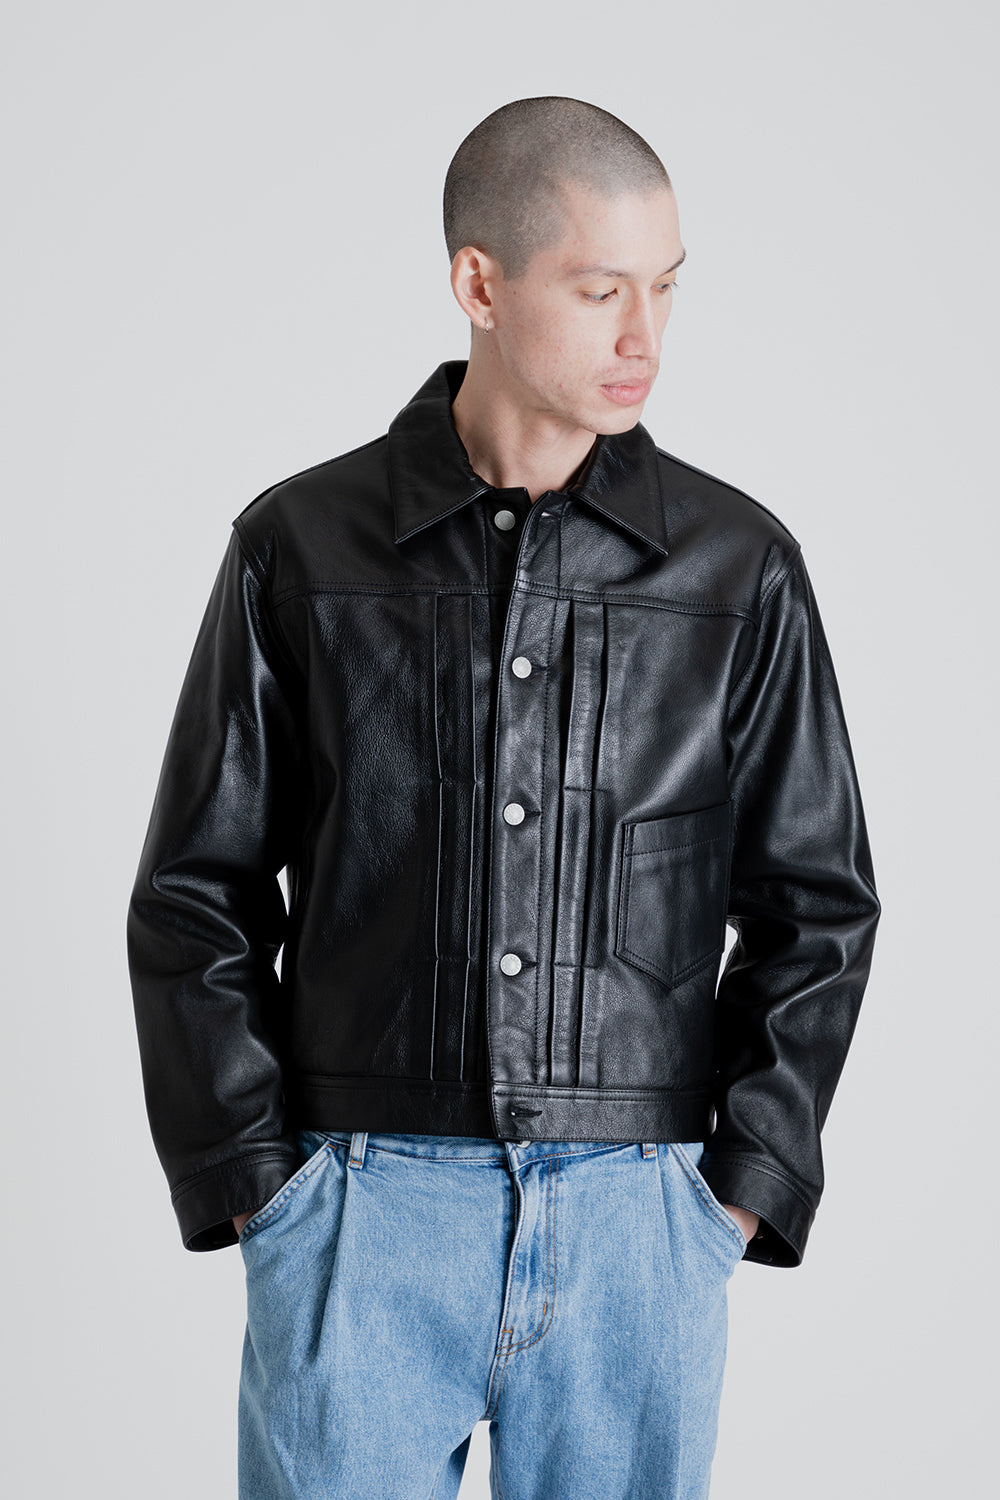 Uniform Bridge Trucker Leather Jacket in Black